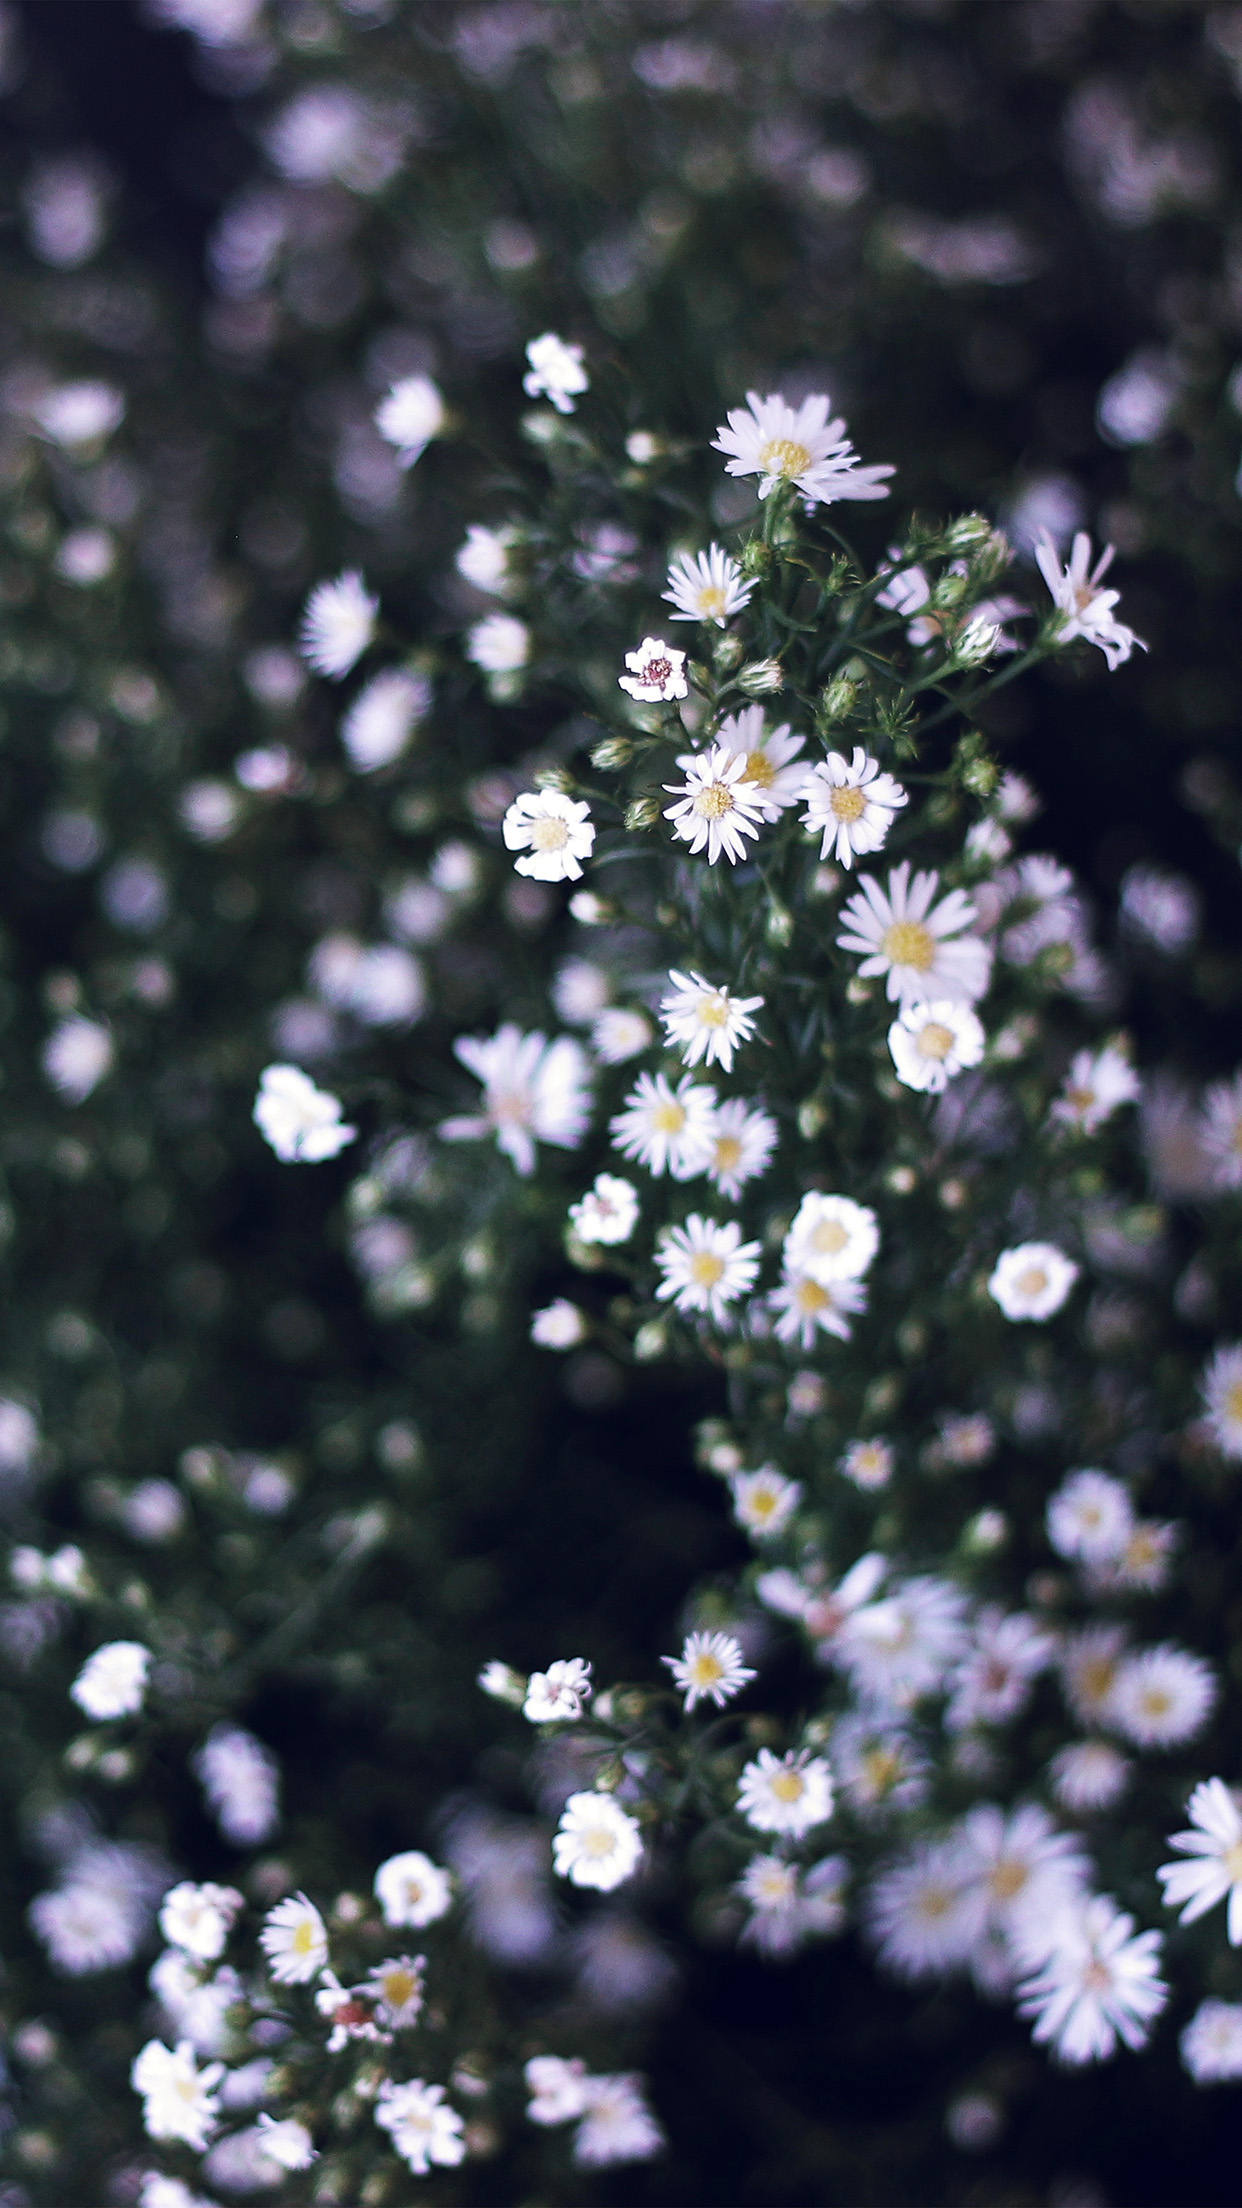 iPhone X wallpaper. flower white spring nature bluish